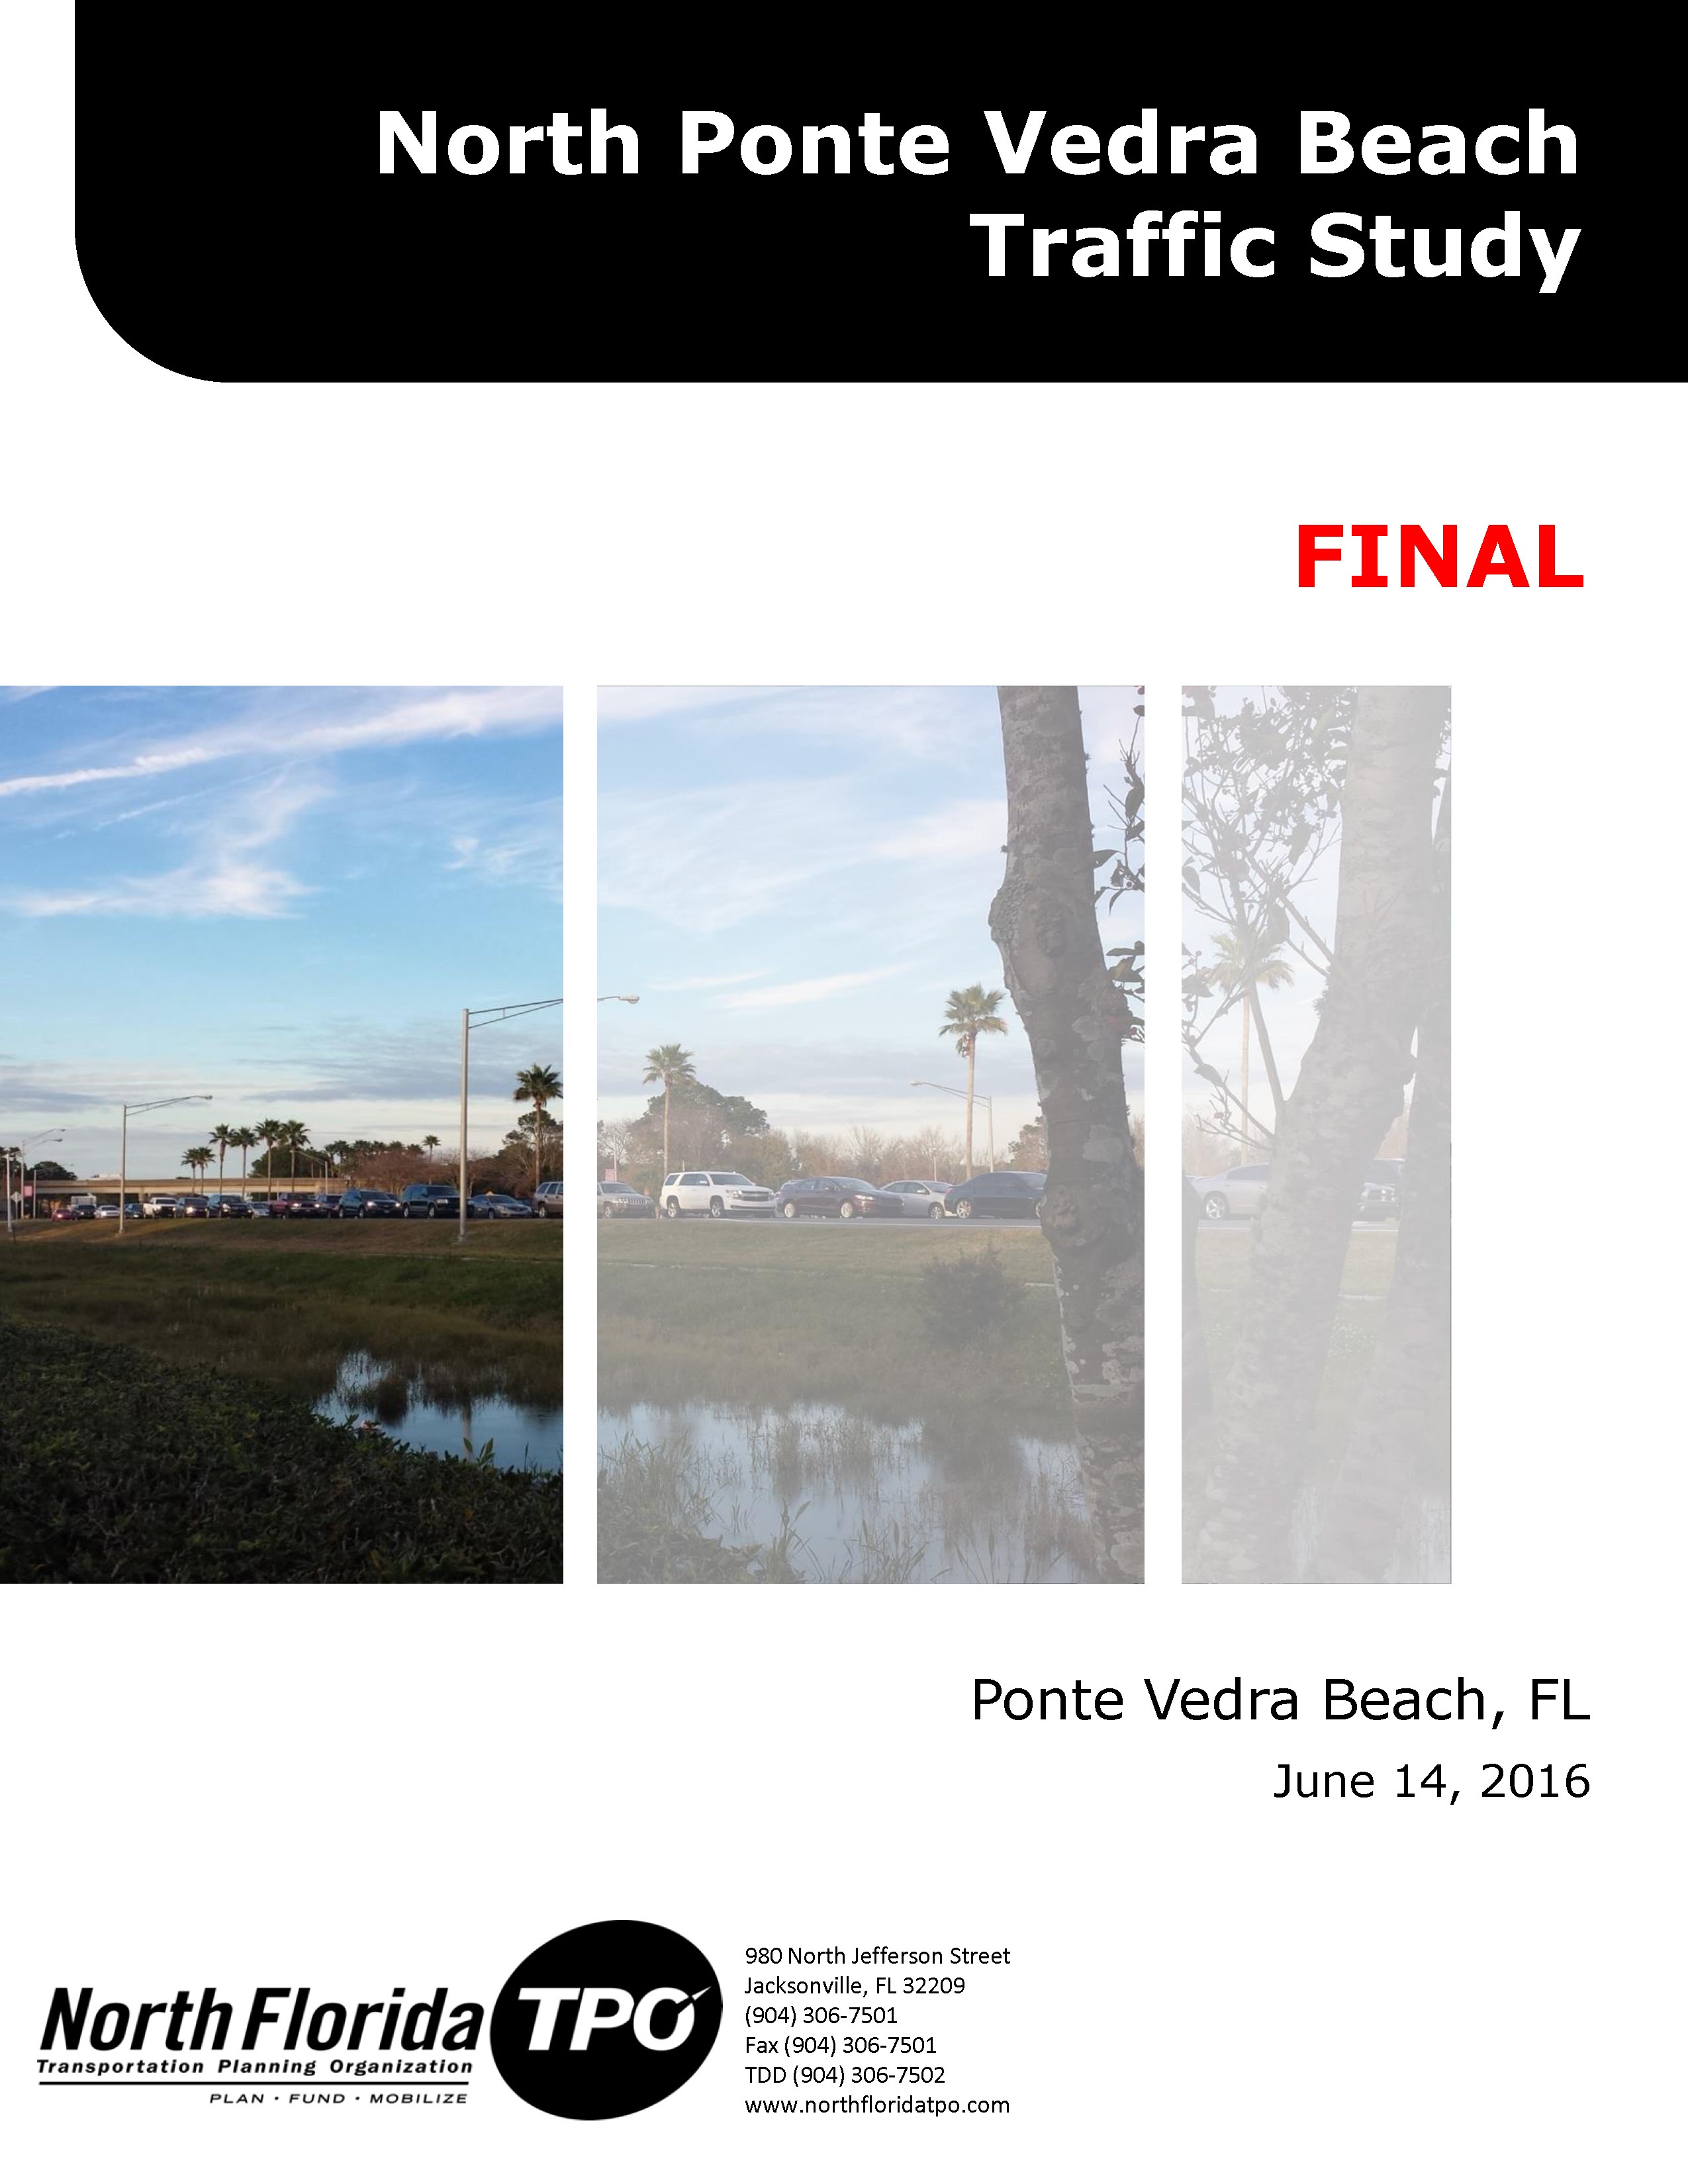 North Ponte Vedra Beach Traffic Study Final 6 14 16 cover